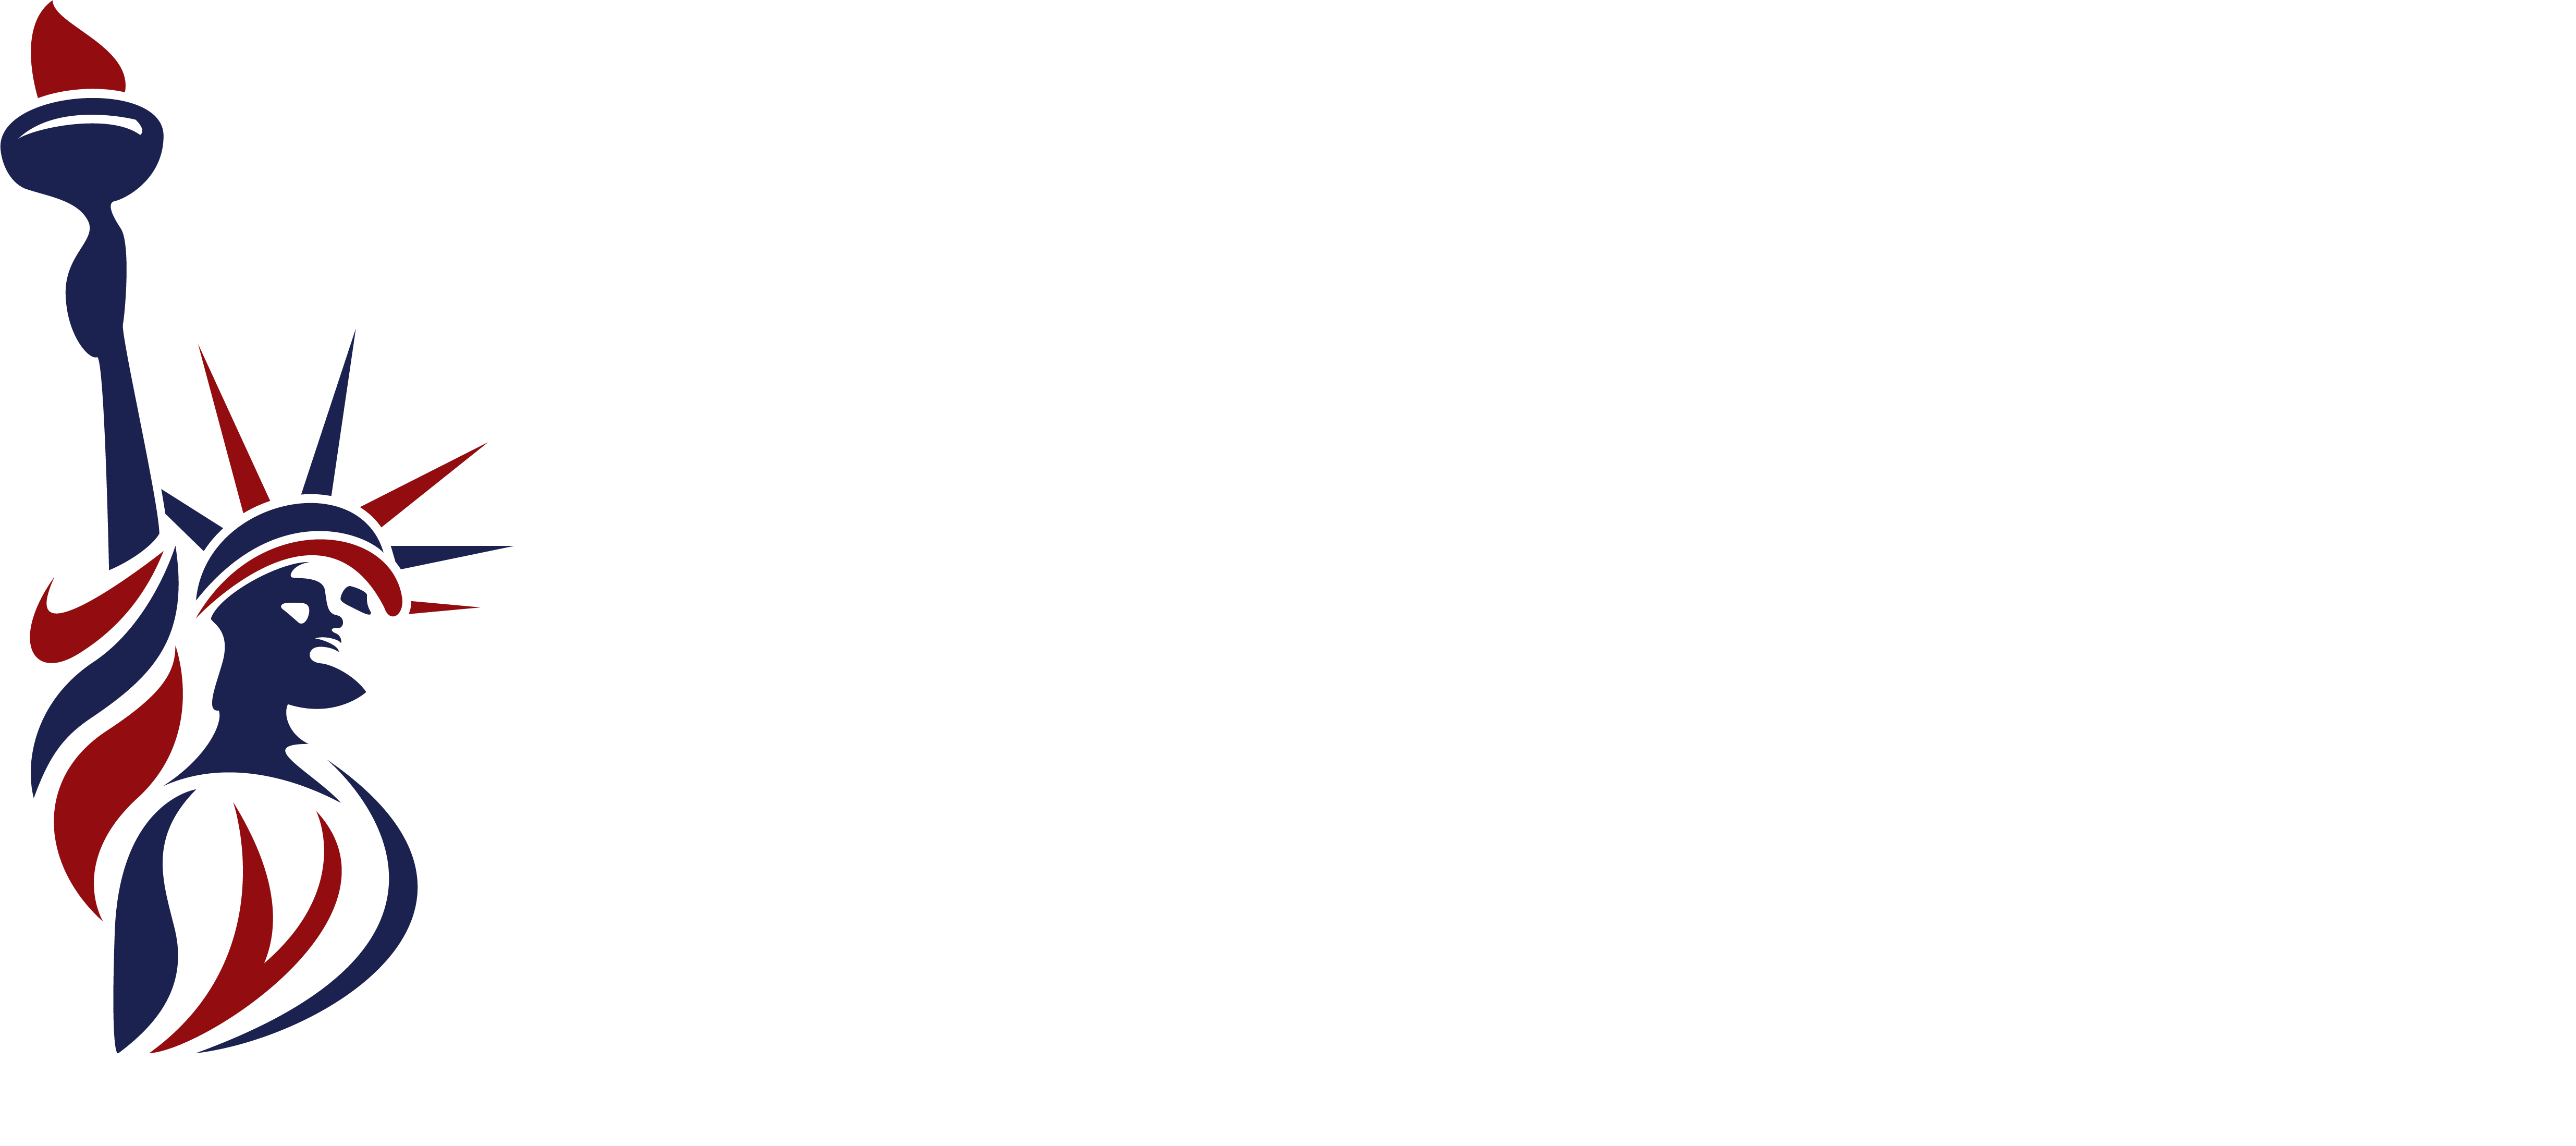 Charleston USA Immigration Law Center, LLP